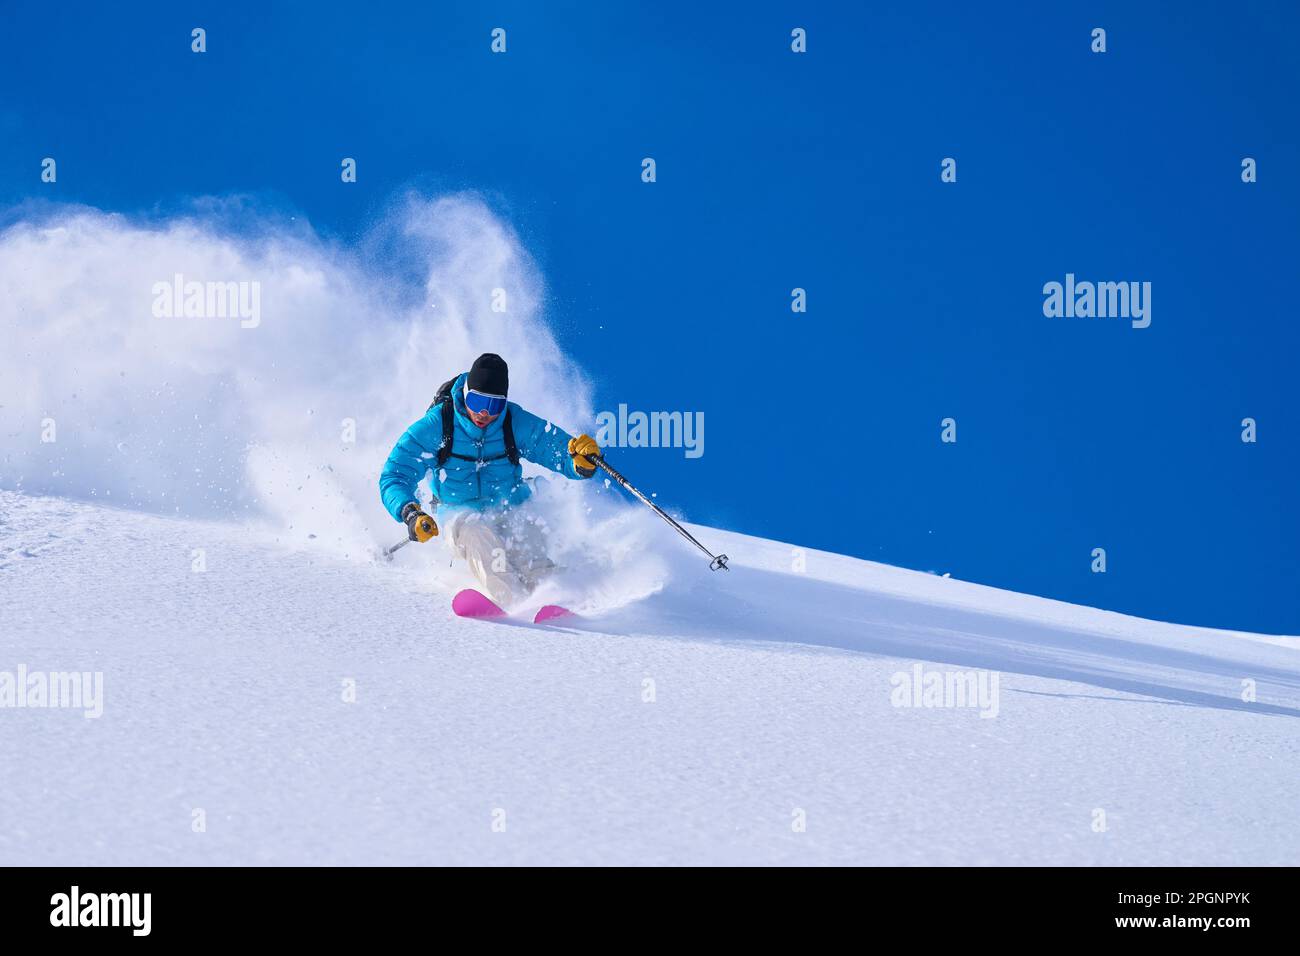 Man skiing on snow covered mountain Stock Photo